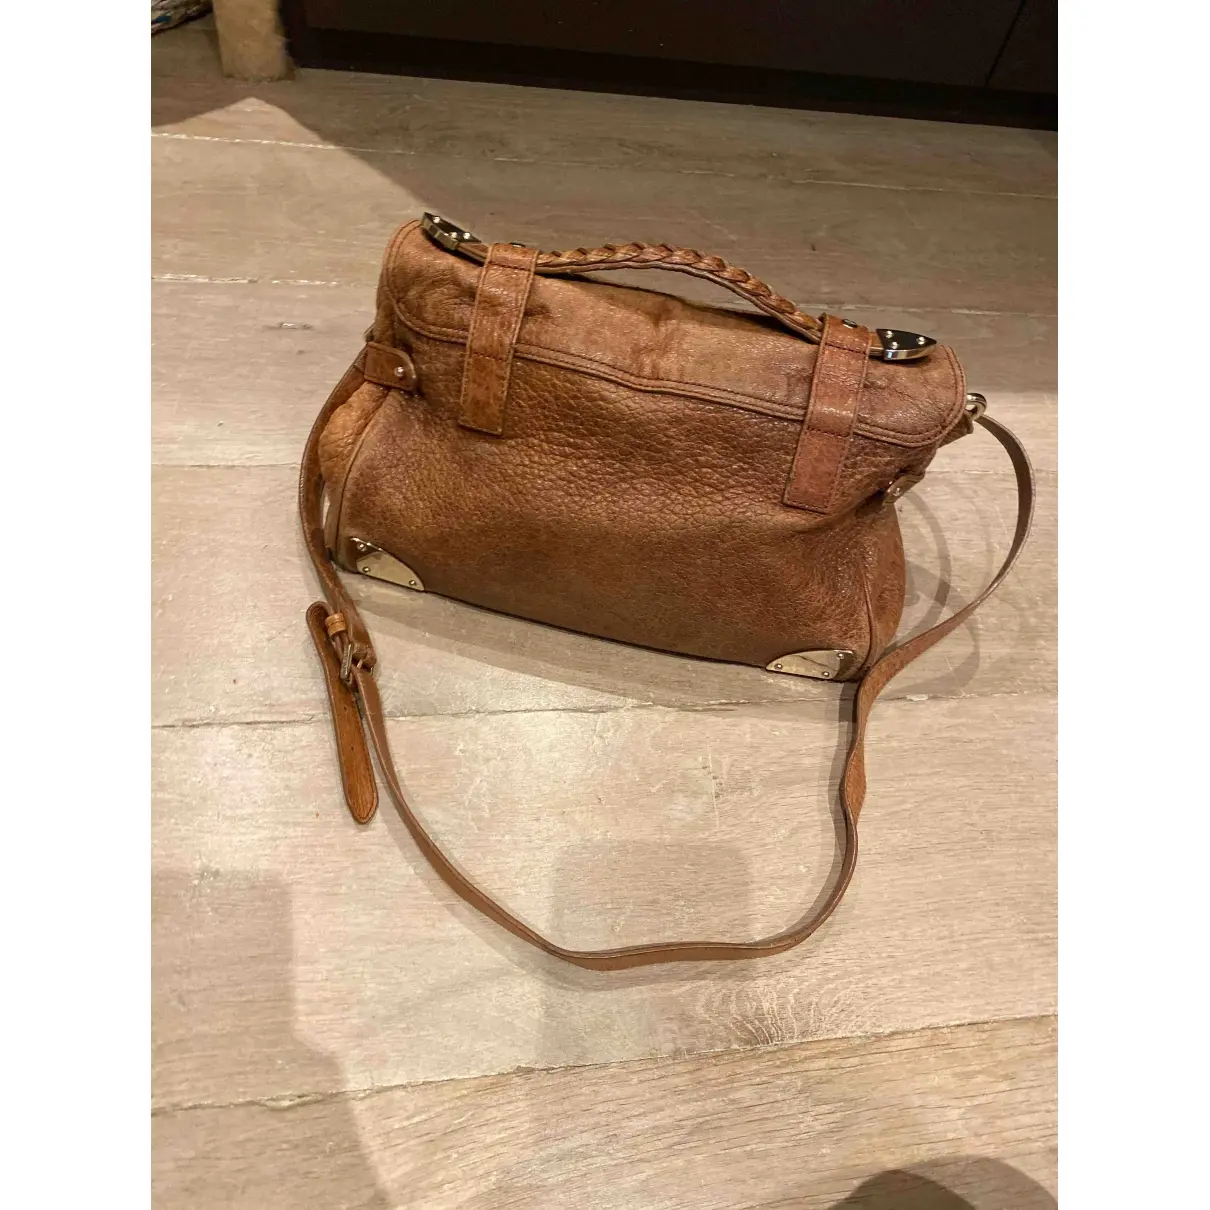 Mulberry Alexa leather handbag for sale